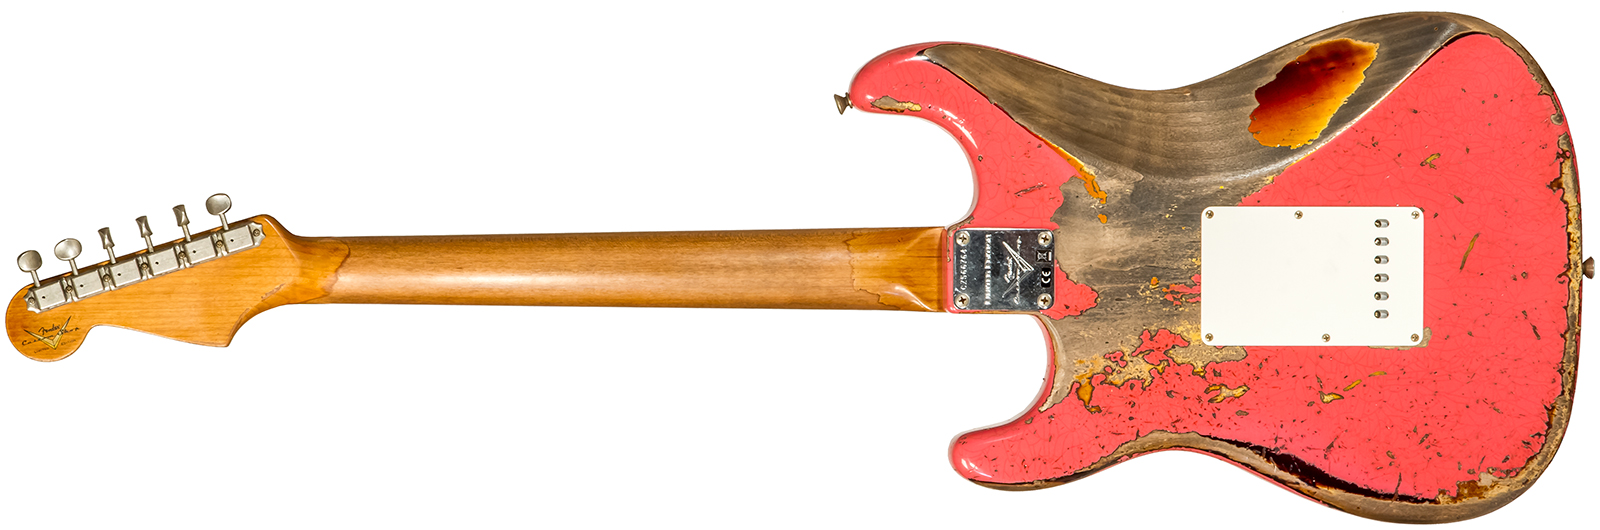 Fender Custom Shop Strat 1960/63 3s Trem Rw #cz566764 - Super Heavy Relic Fiesta Red Ov. 3-color Sunburst - Elektrische gitaar in Str-vorm - Variation